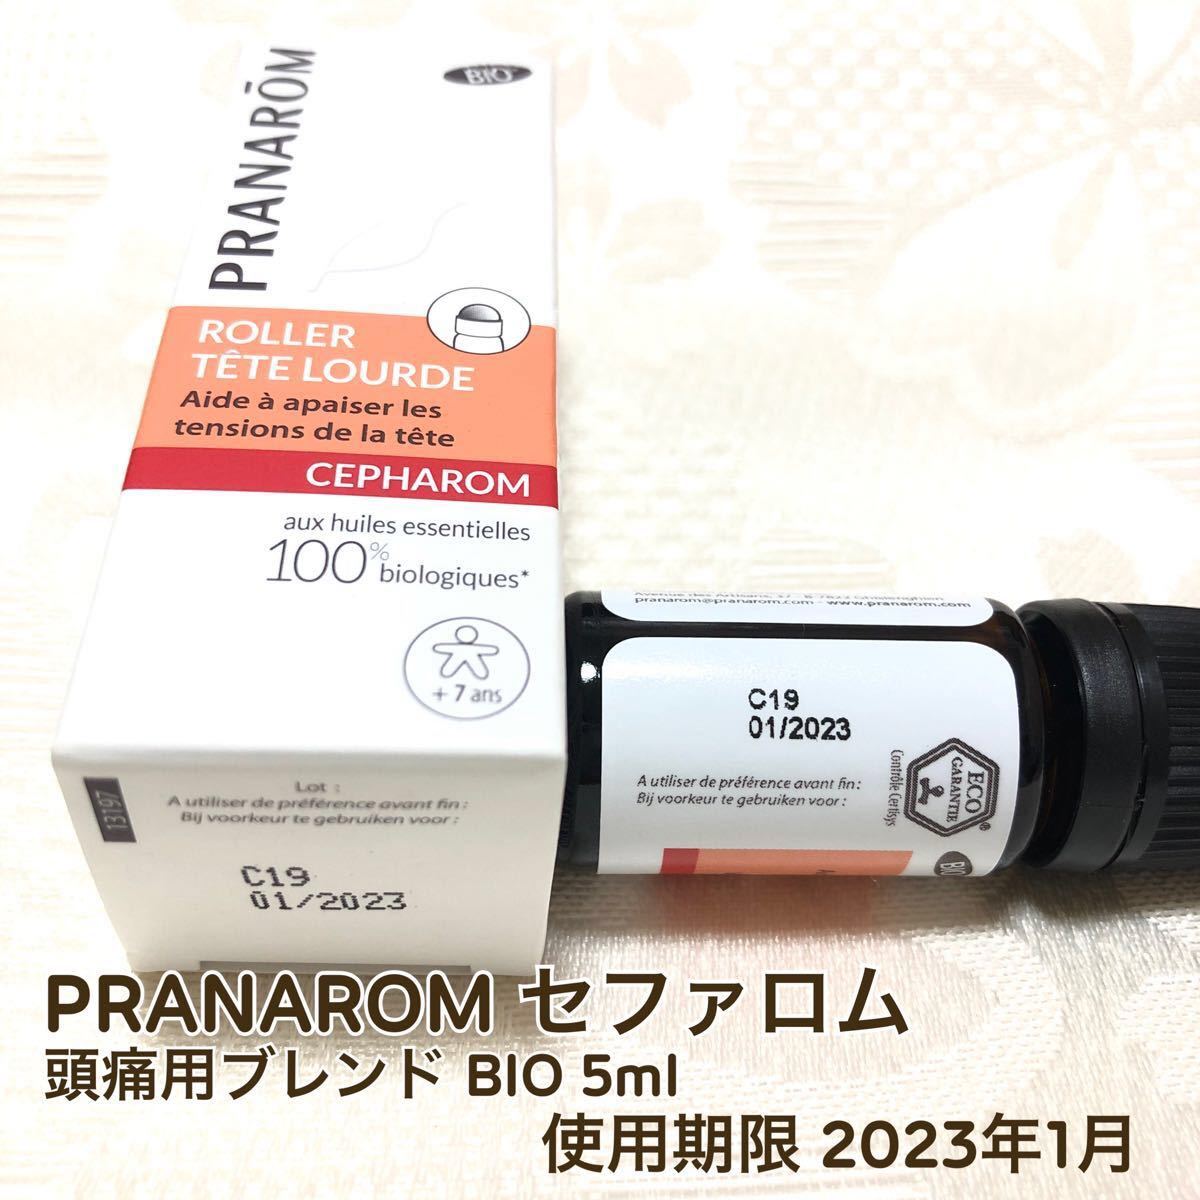 PRANAROM 【セファロム】BIO 頭痛用ブレンドローラー 5ml プラナロム